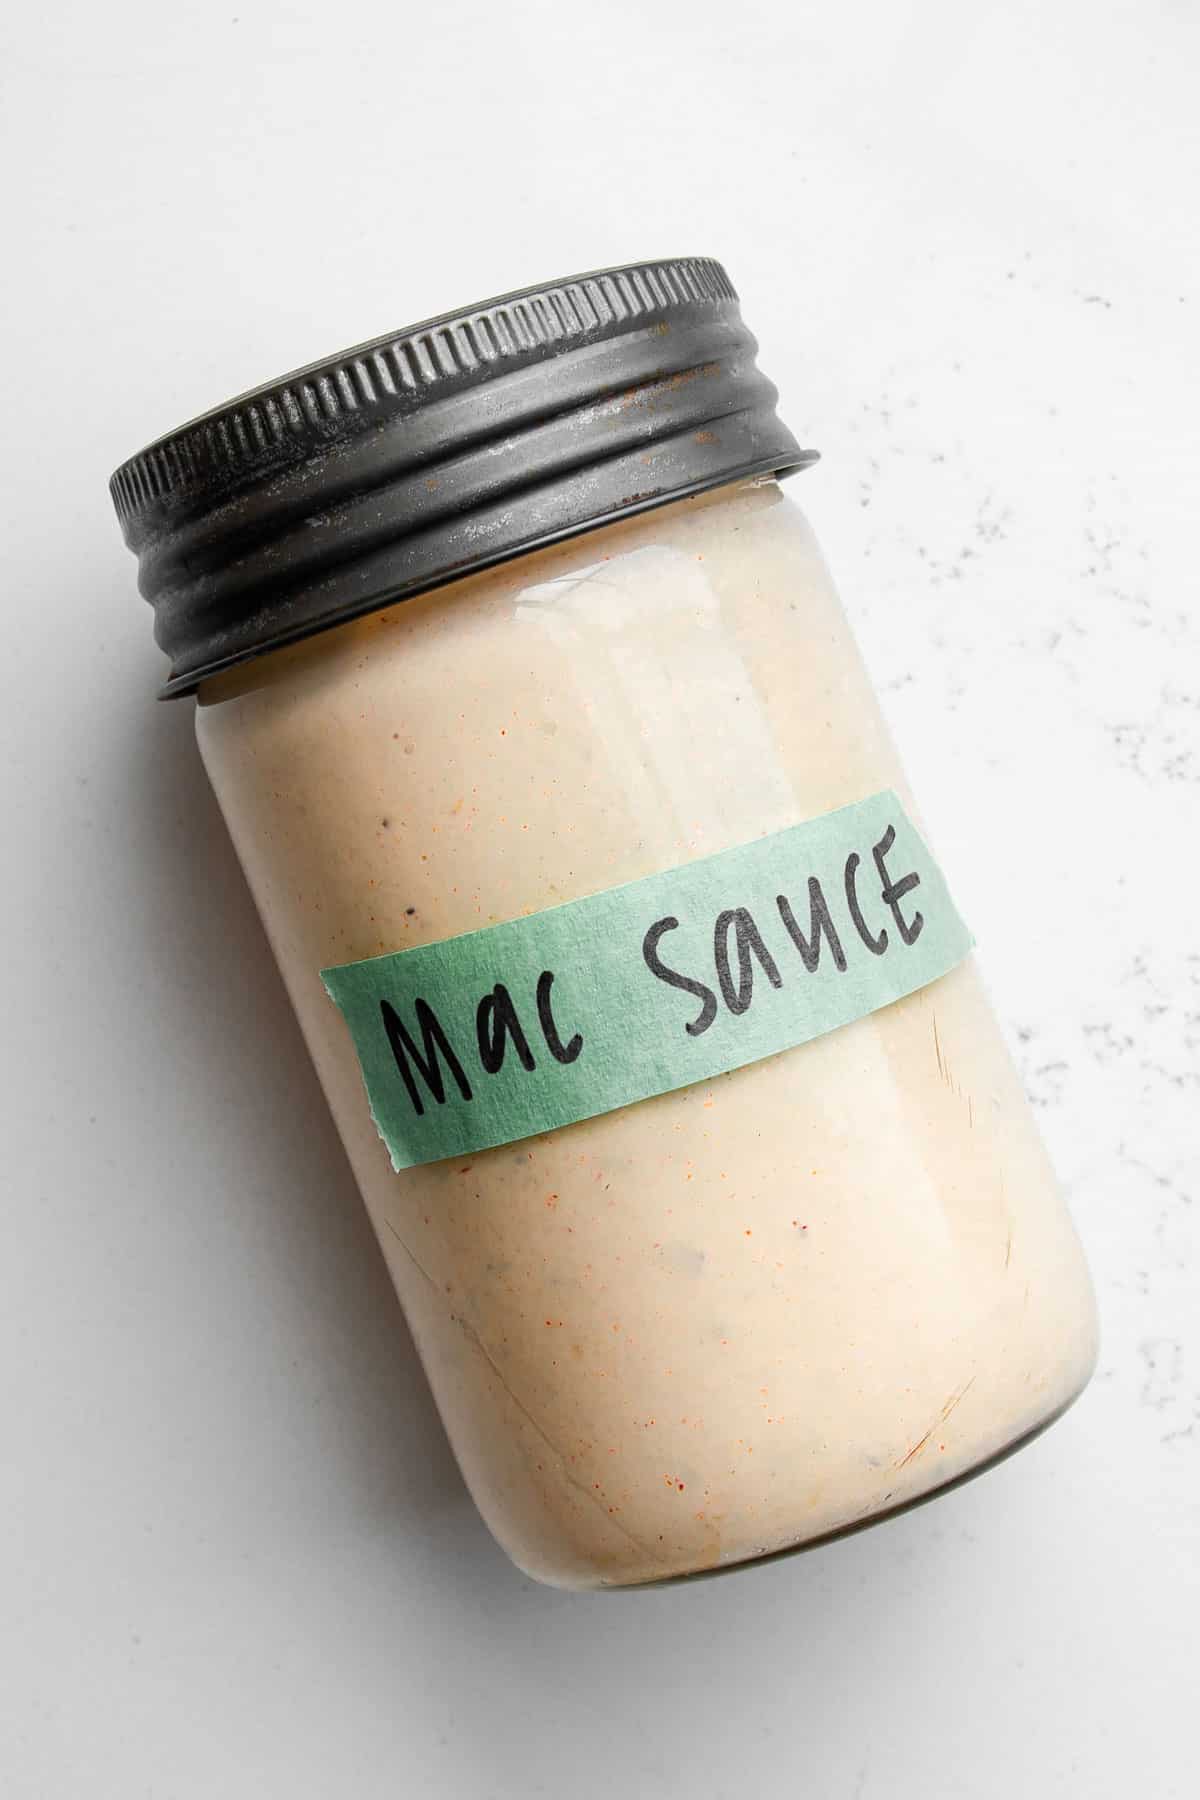 homemade big mac sauce in a jar labeled.